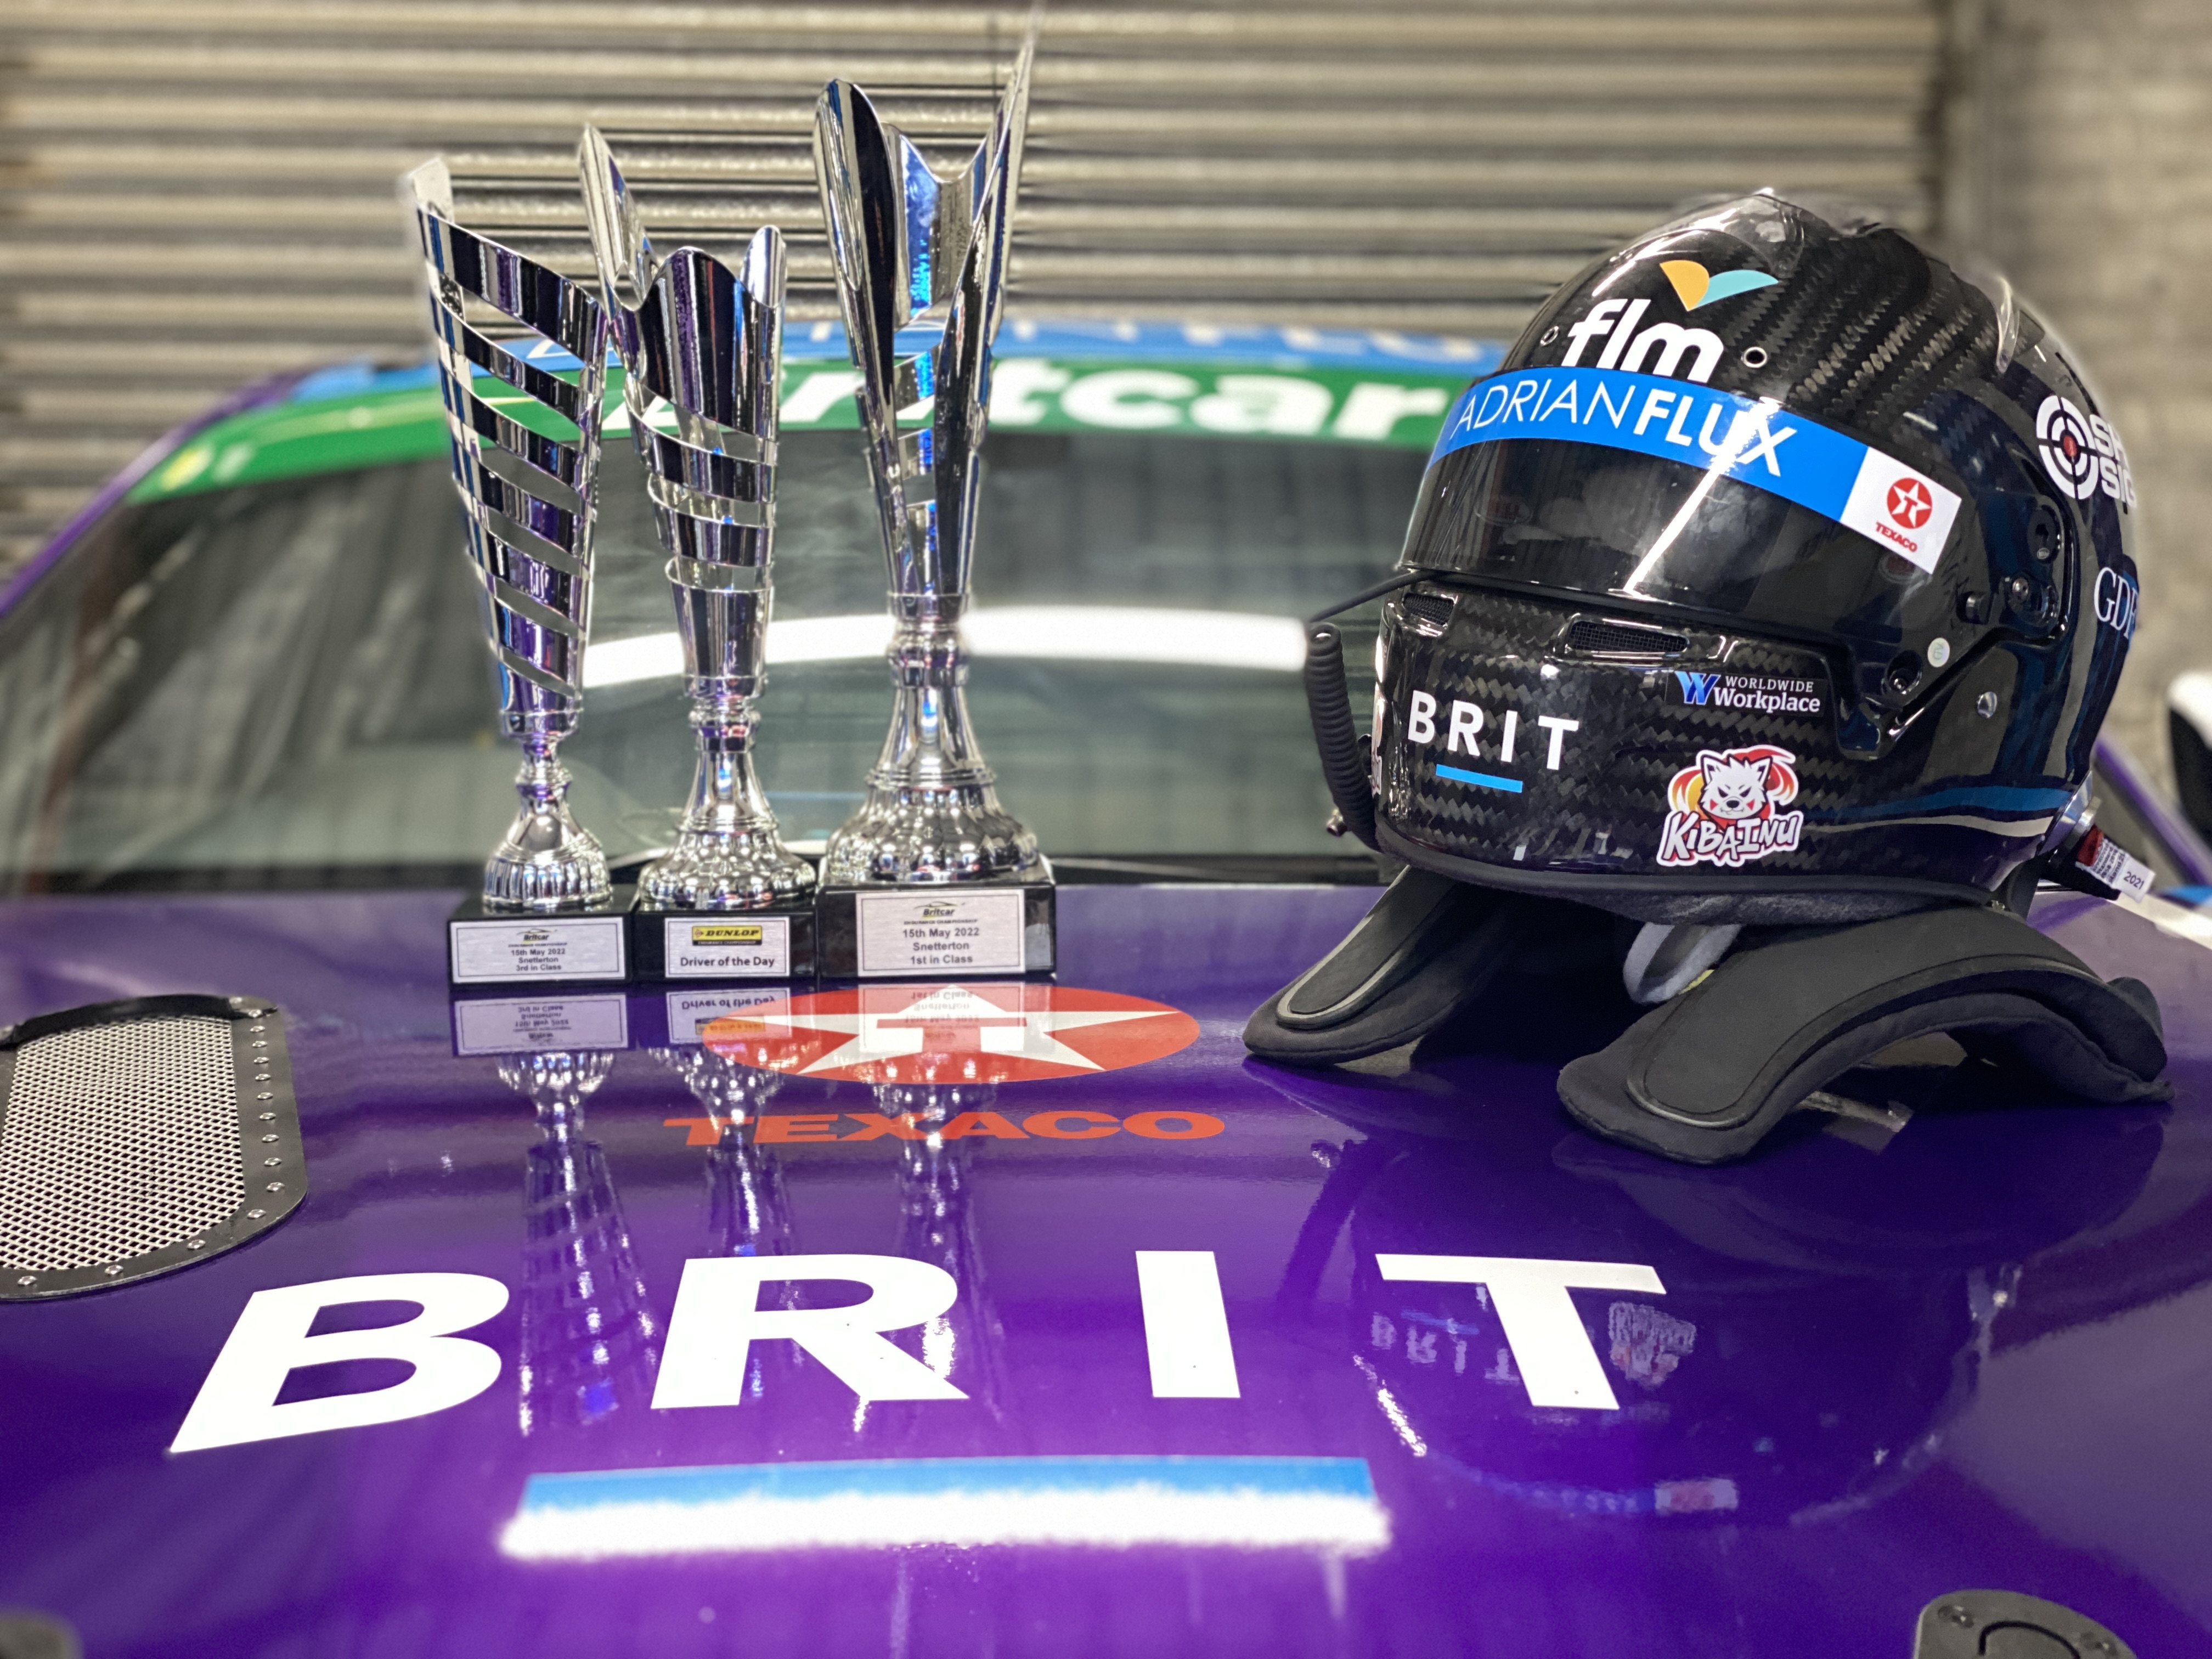 Image shows three Team BRIT trophies and racing helmet 